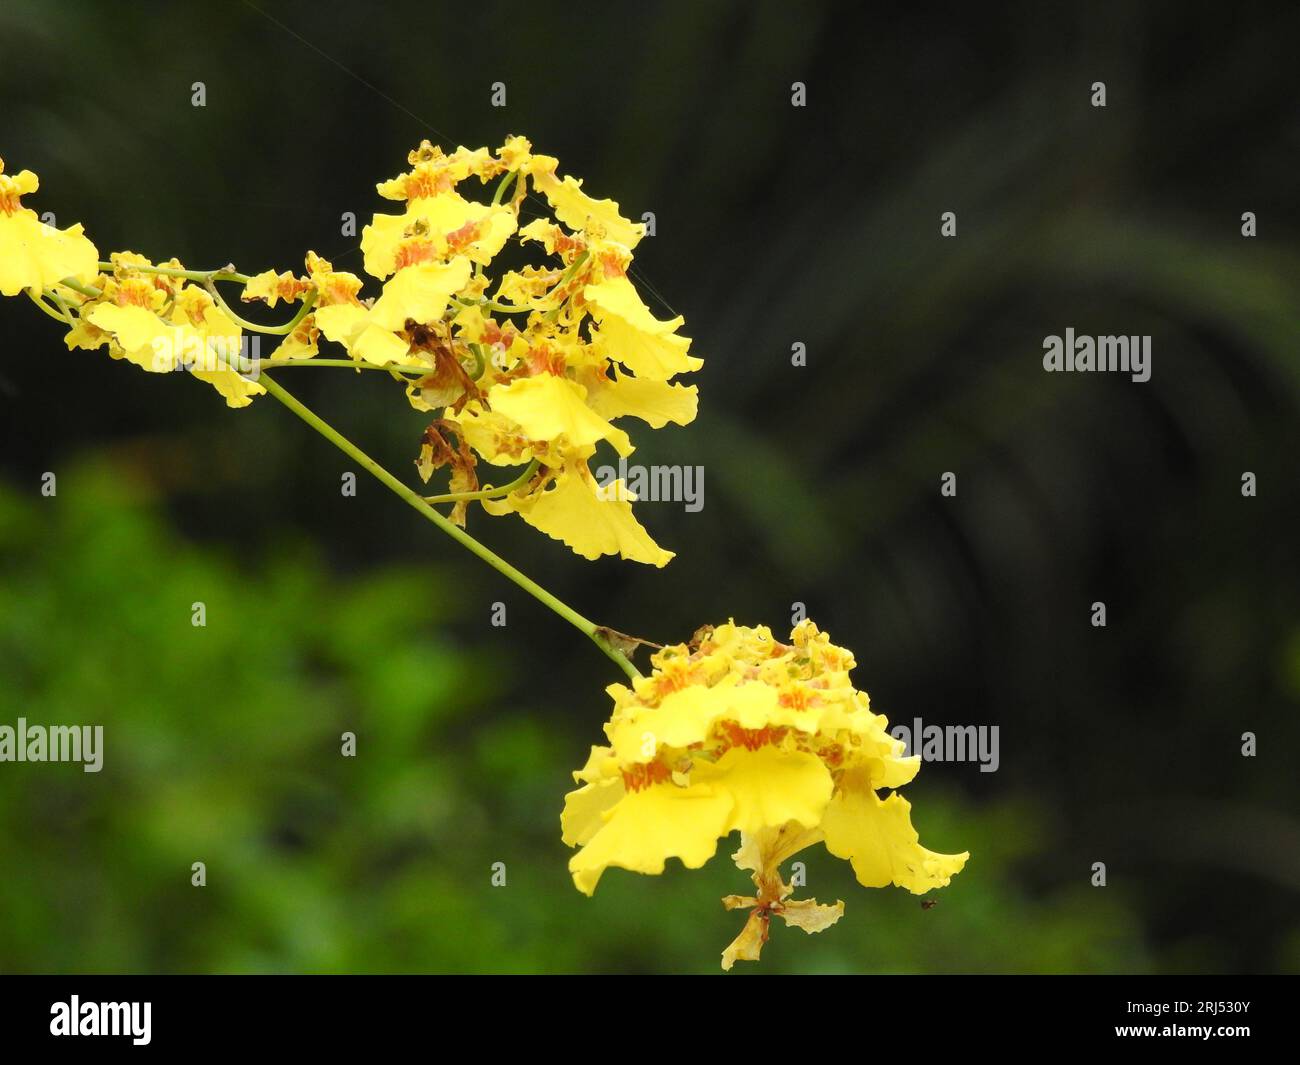 A vibrant yellow Oncidium flexuosum flowers grown in the garden Stock Photo